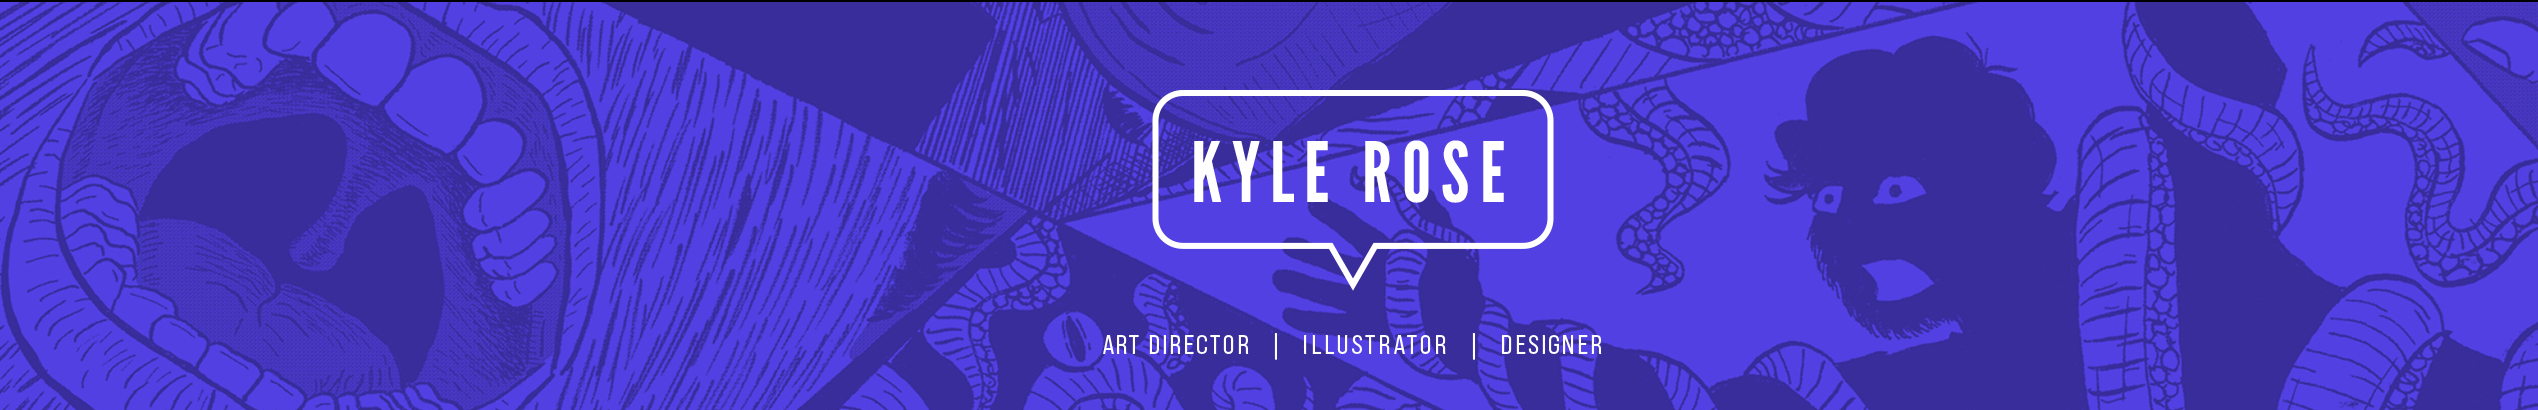 Kyle Rose's profile banner